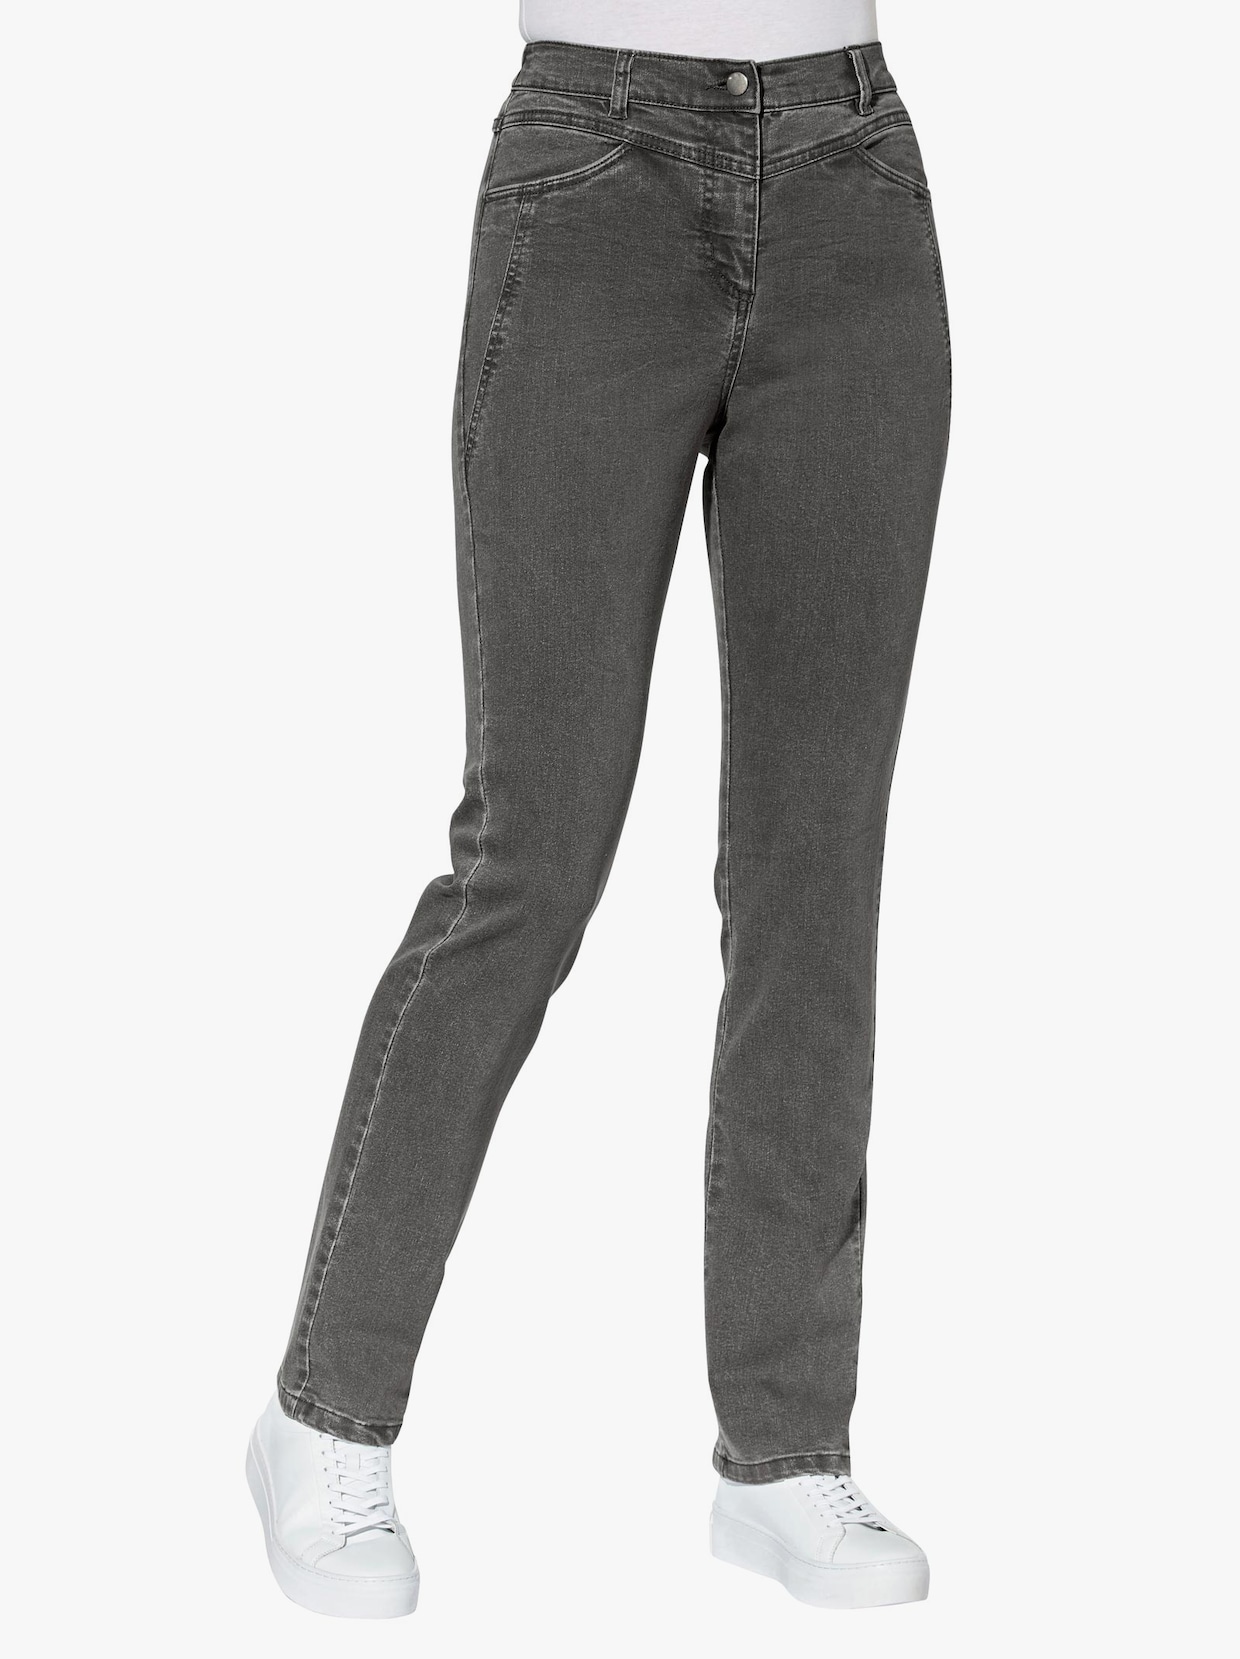 jeans - grey denim